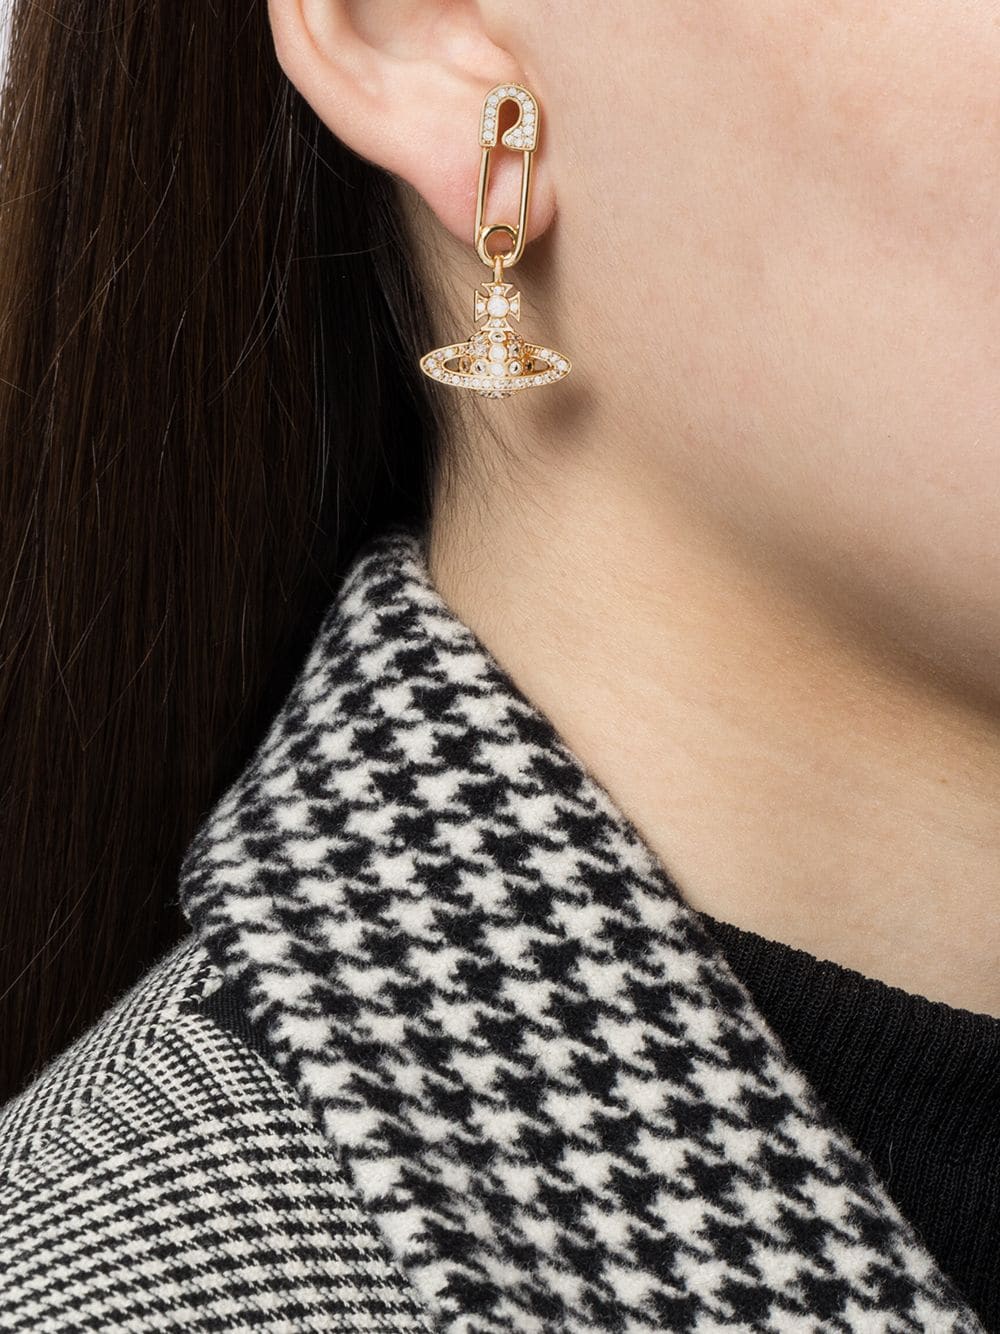 Lucrece Pearl Choker Planet Orb Necklace Earrings Set Silver Gold